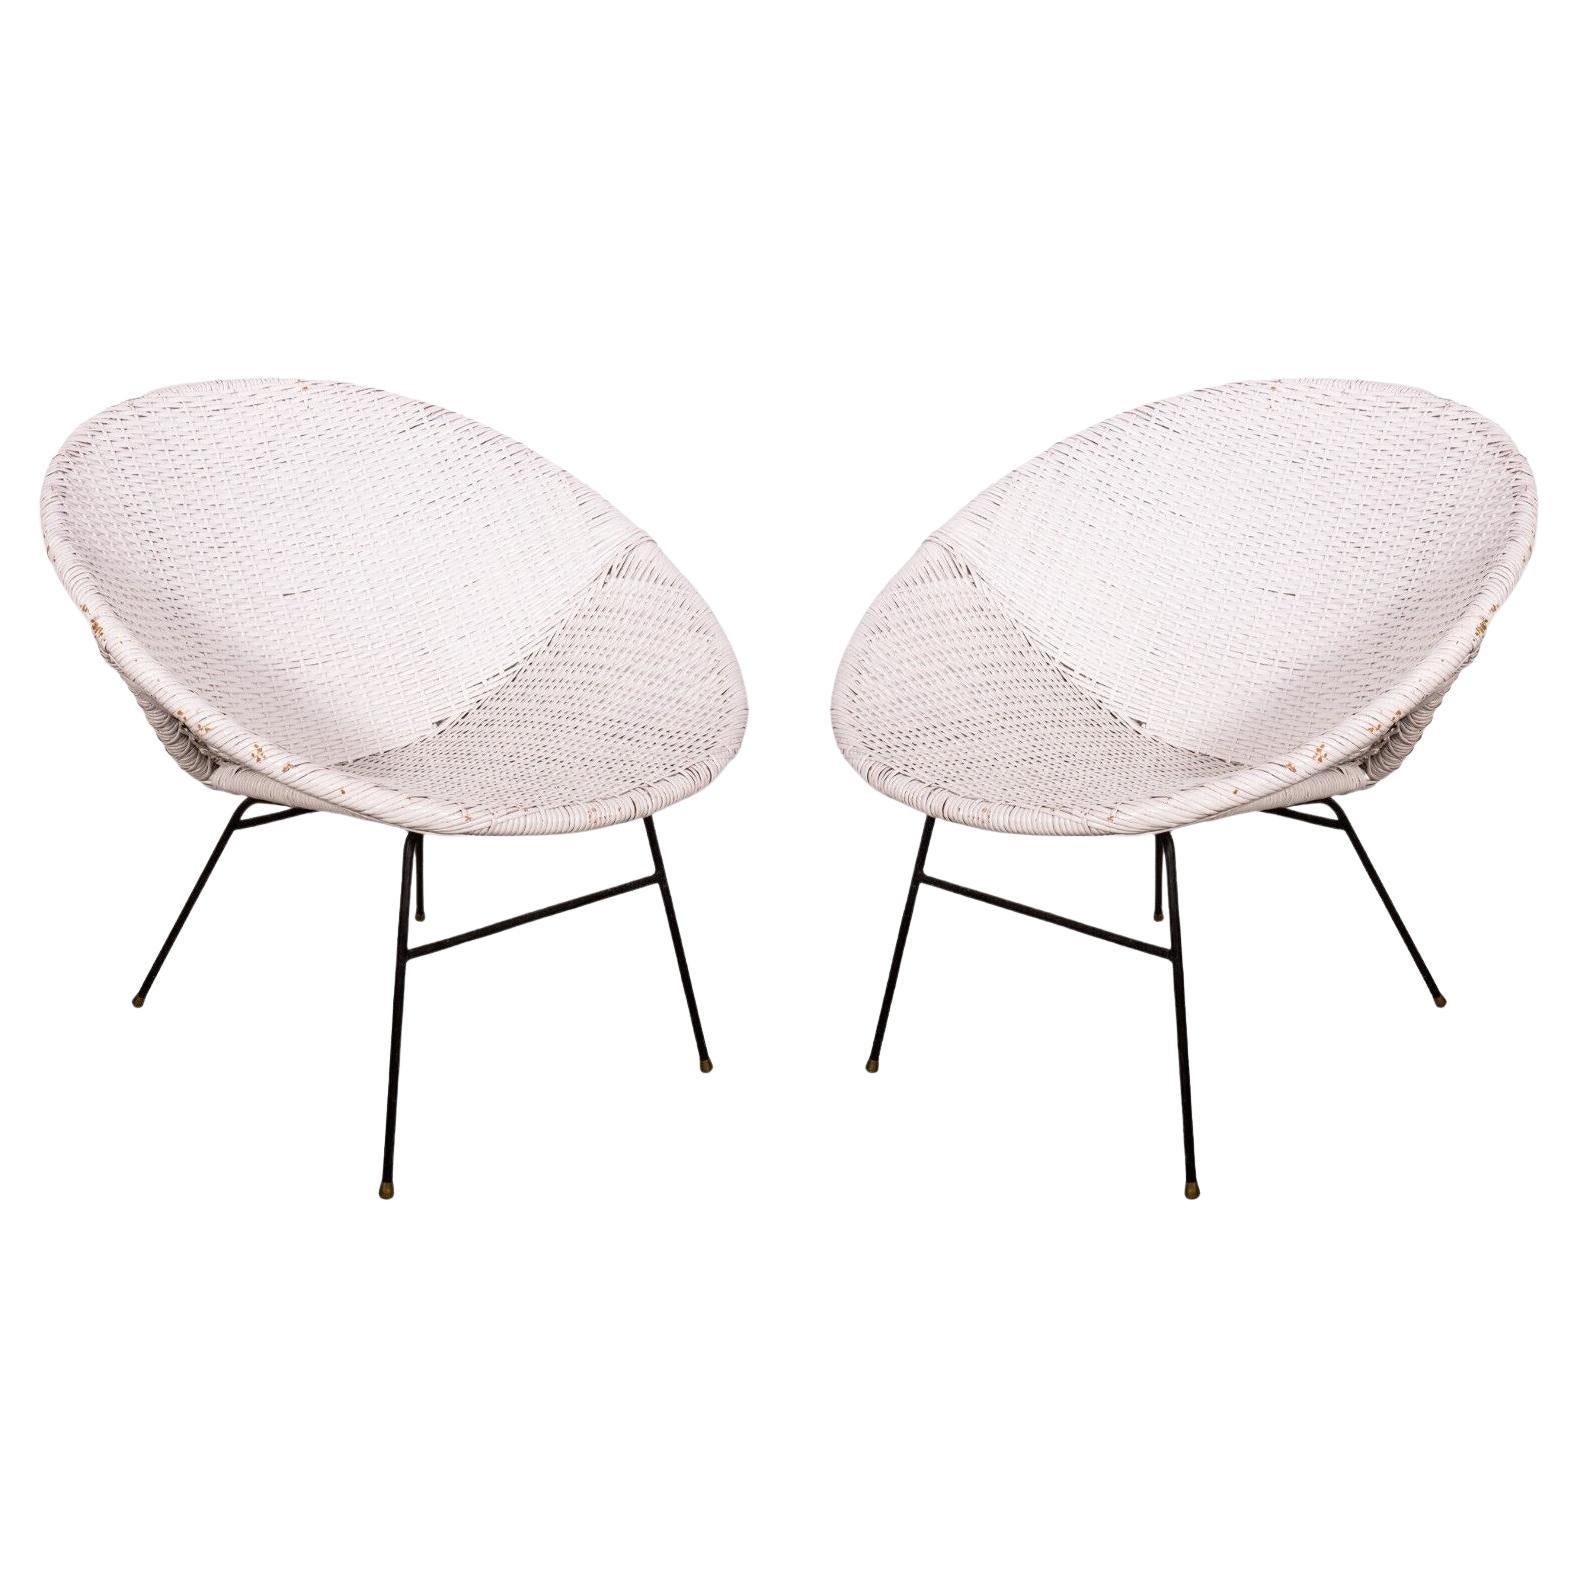 Mid-Century Modern Pair of White Scoop Rattan Chairs